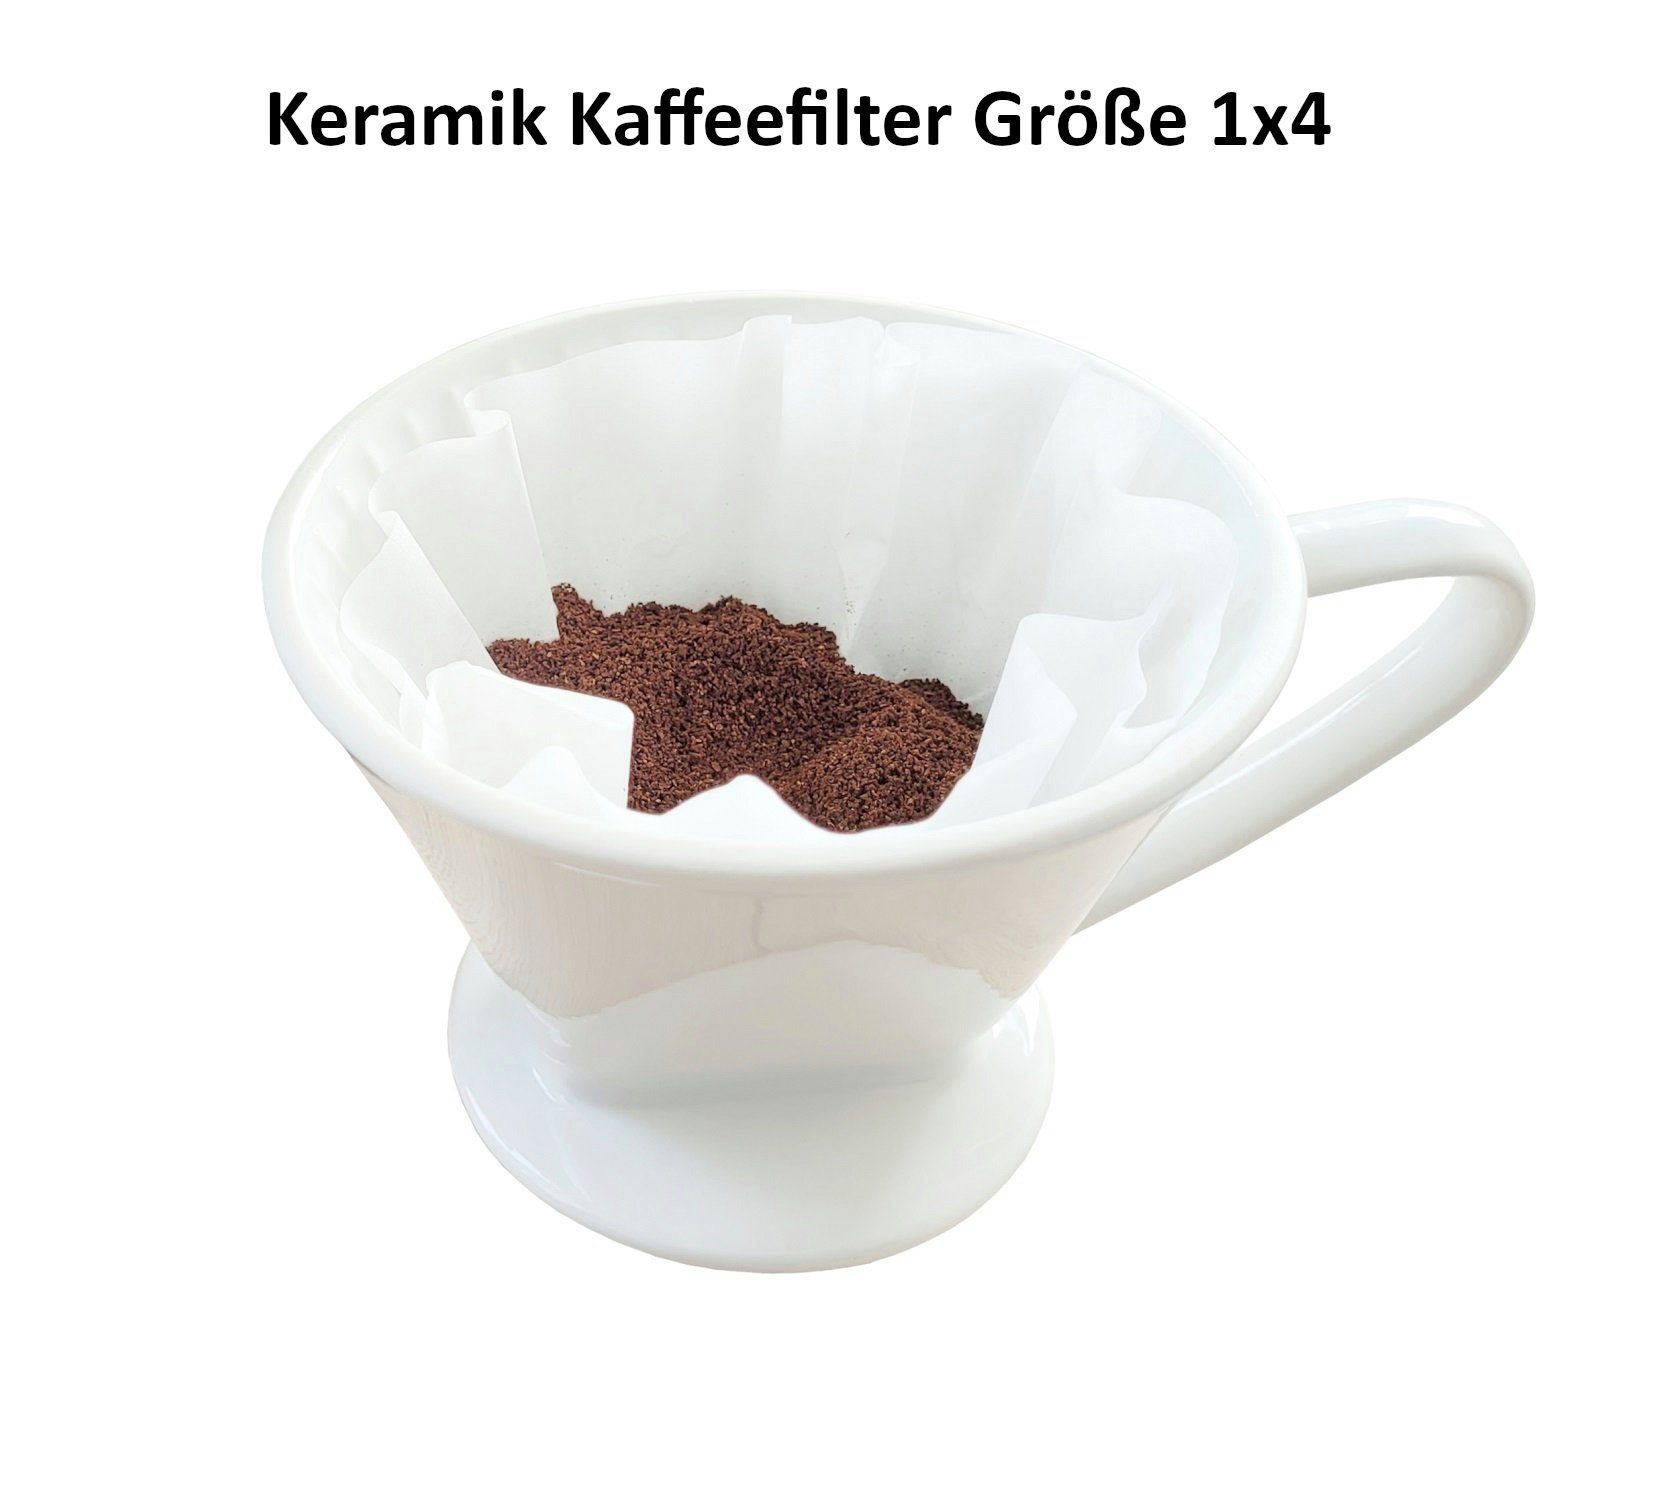 für 4 Provance Permanentfilter Keramik Filtertüten Kaffeefilter Keramikfilter Größe 1x4,